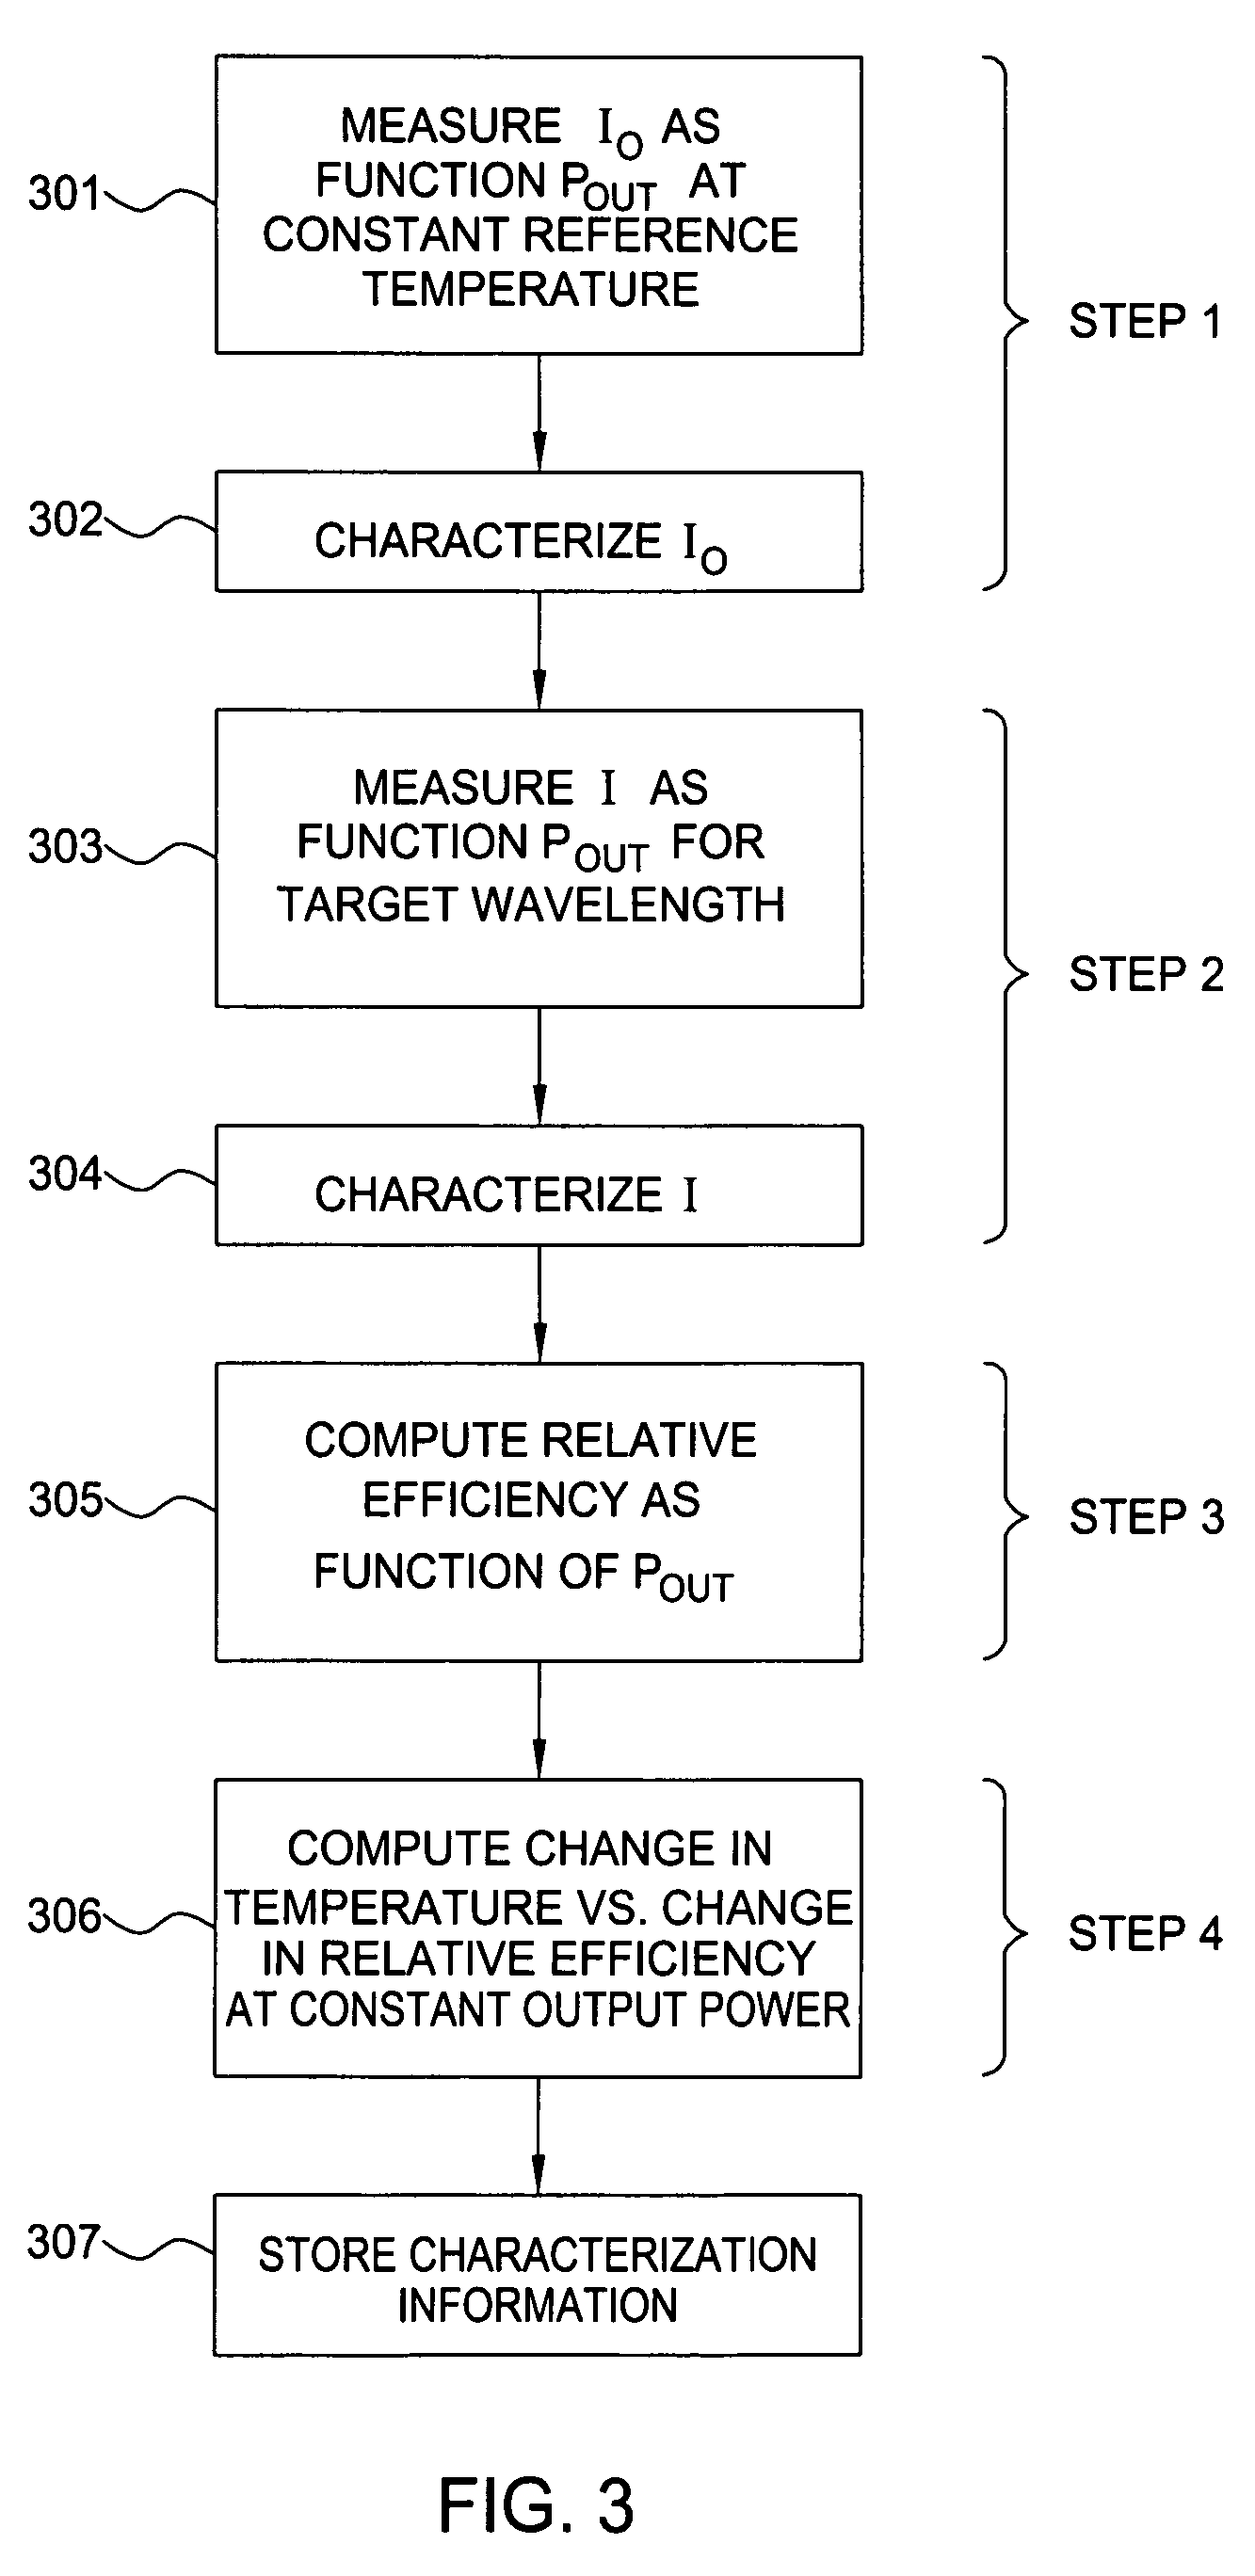 Laser wavelength control arrangement and method